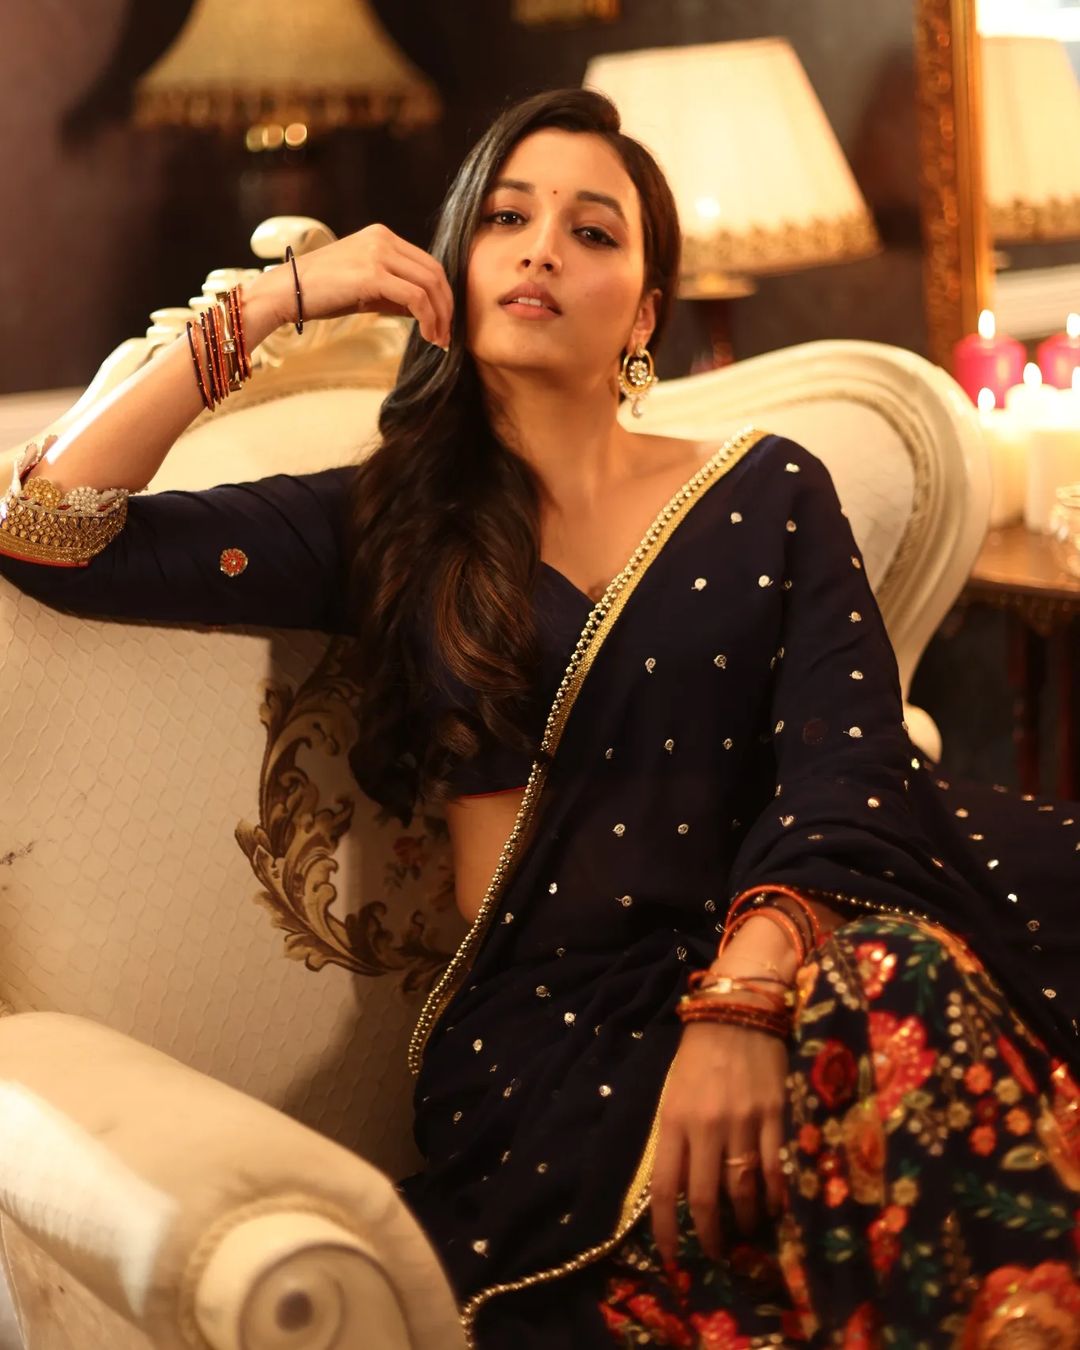 Actress srinidhi shetty hot photos in yellow colour lehenga getting viral